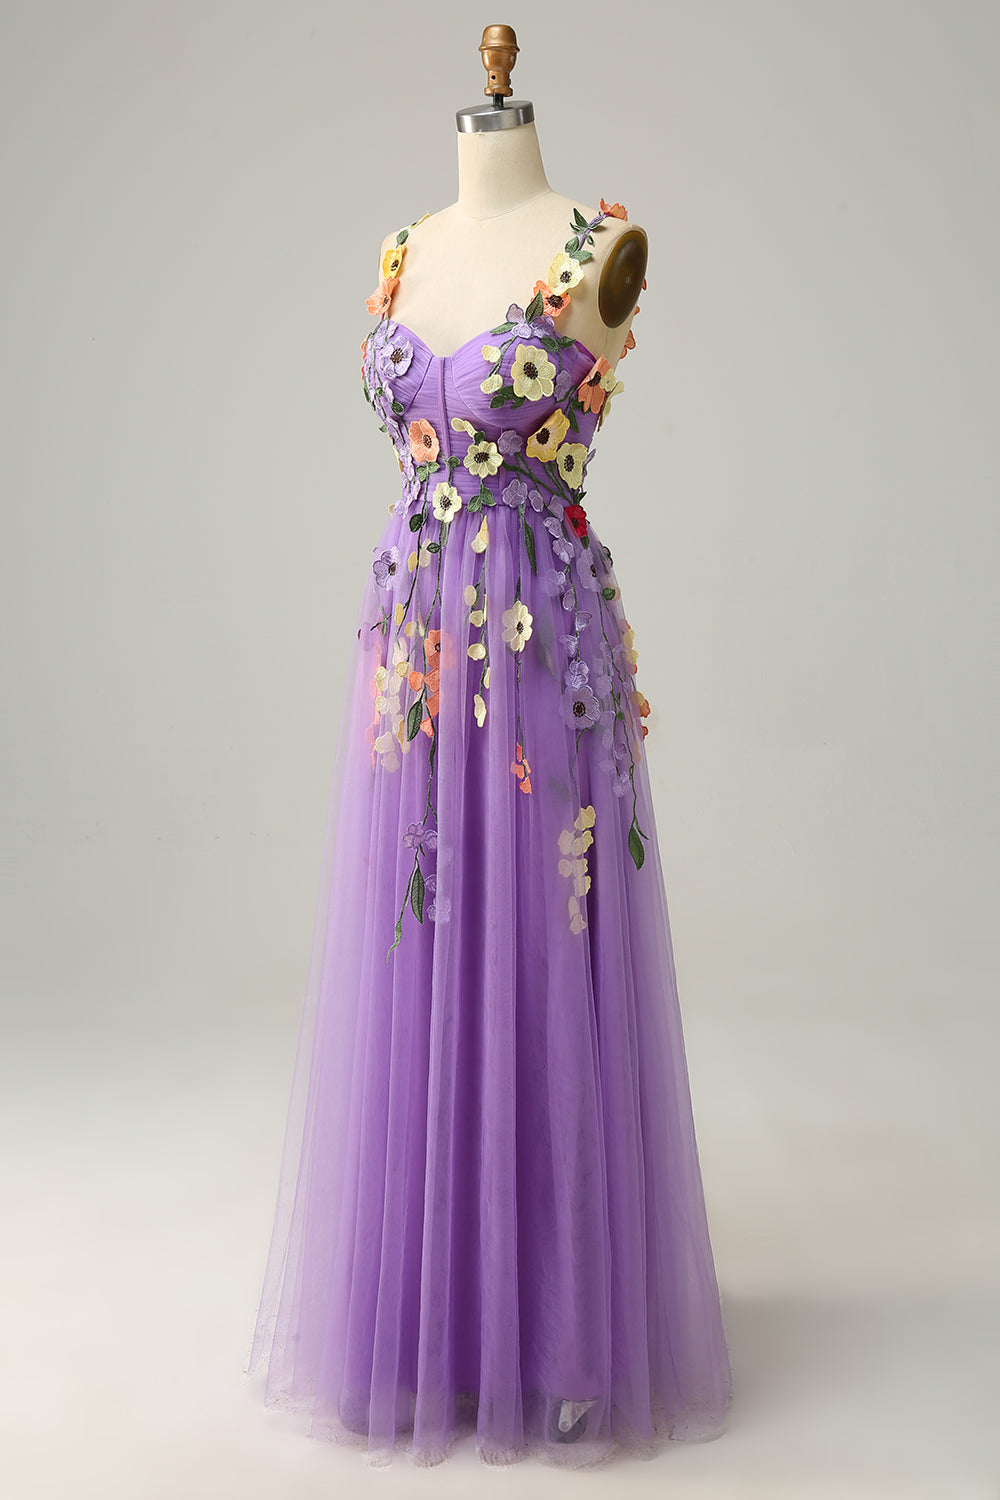 Flower A-Line Dark Purple Prom Dress